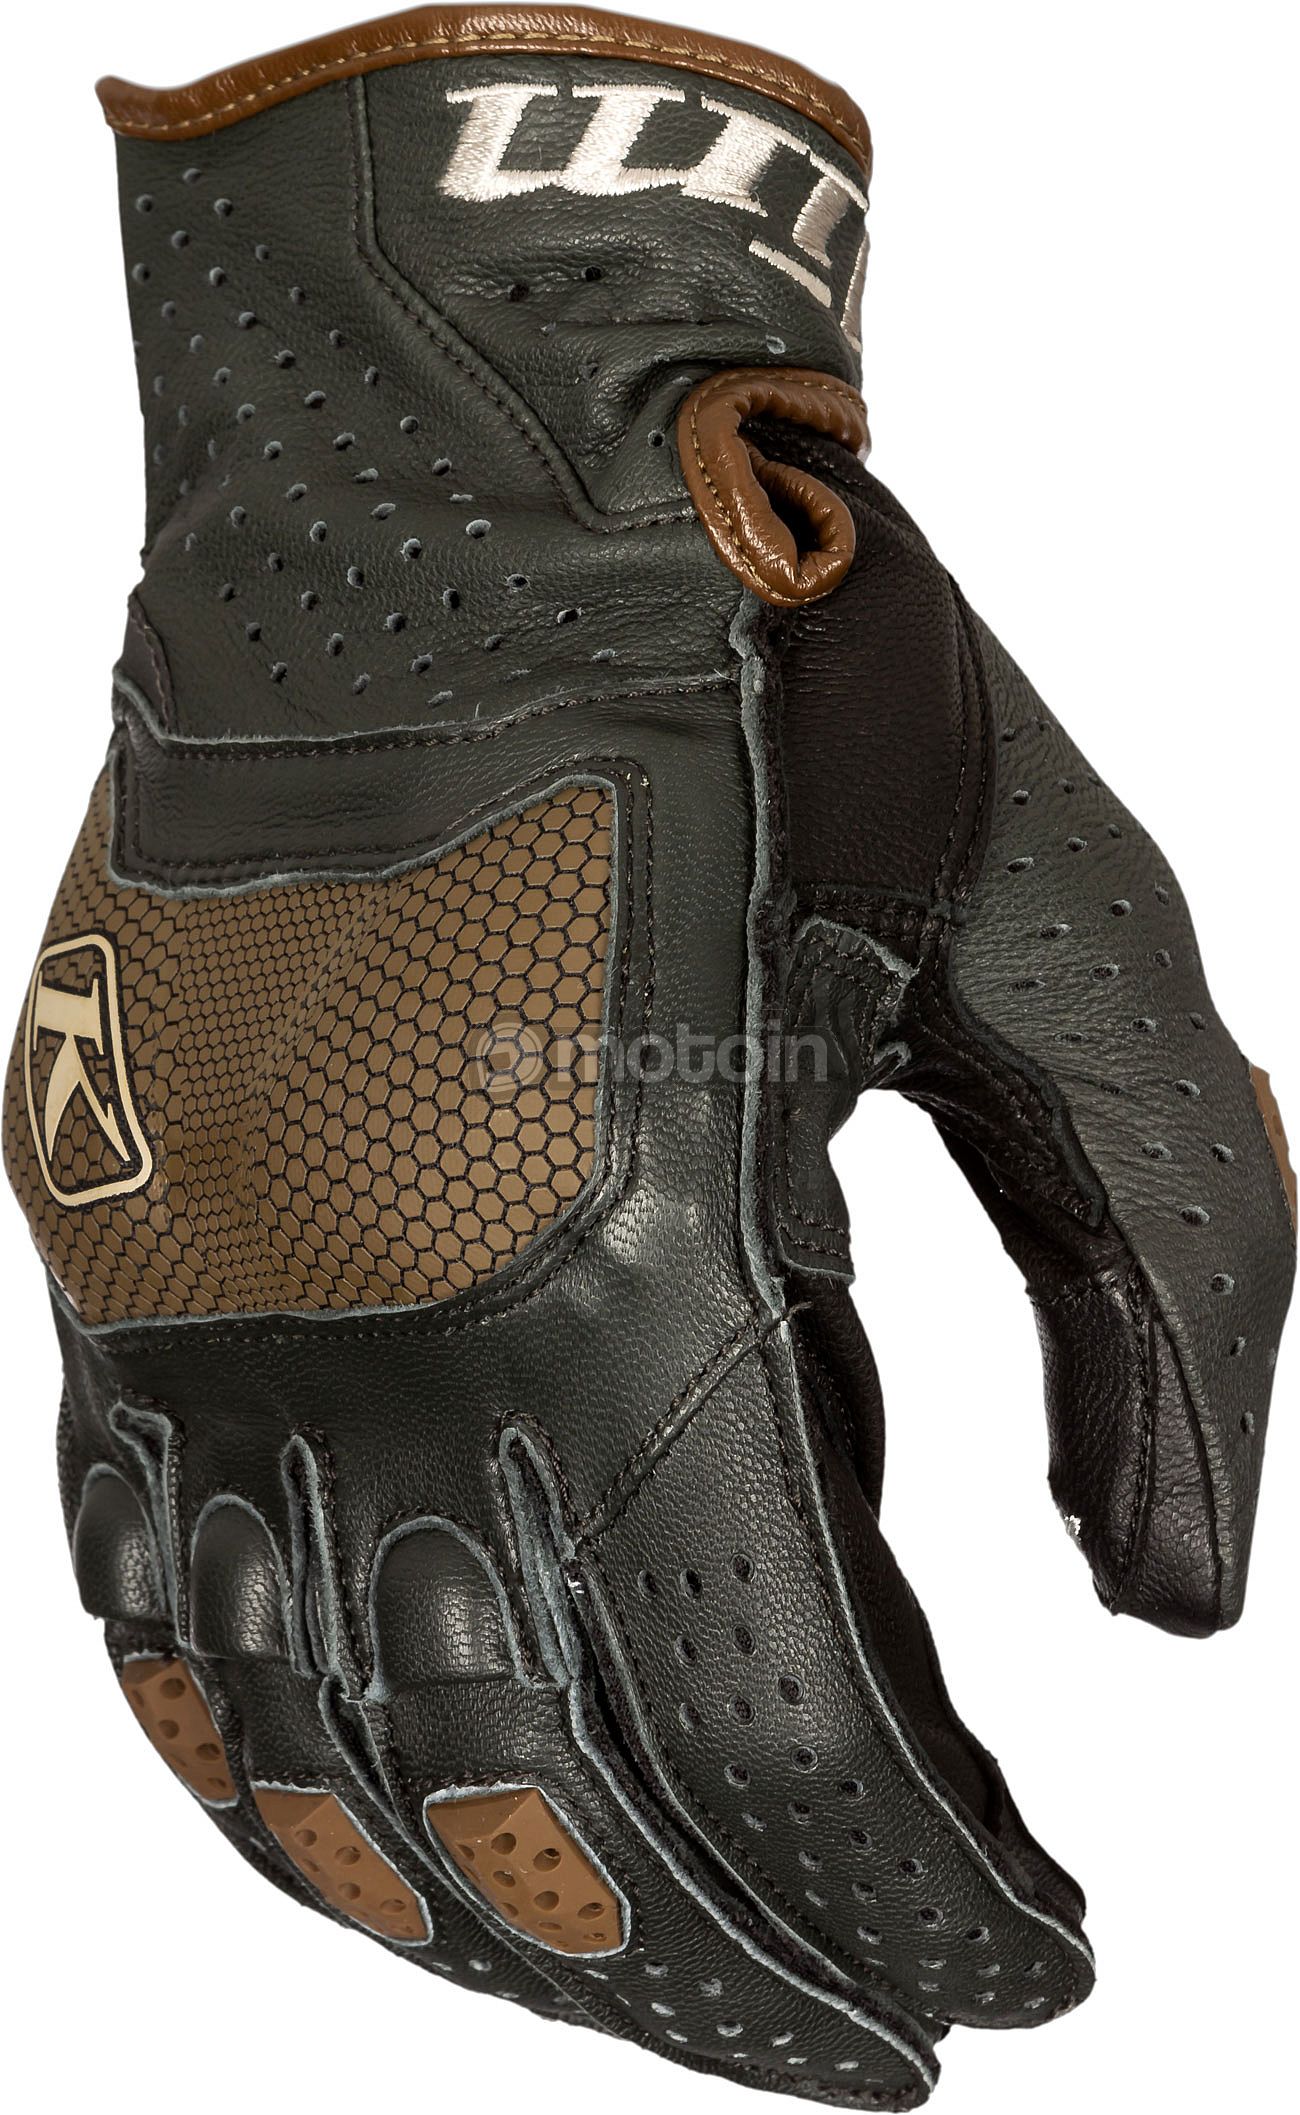 SM Aero Short Glove Badlands Black Pro